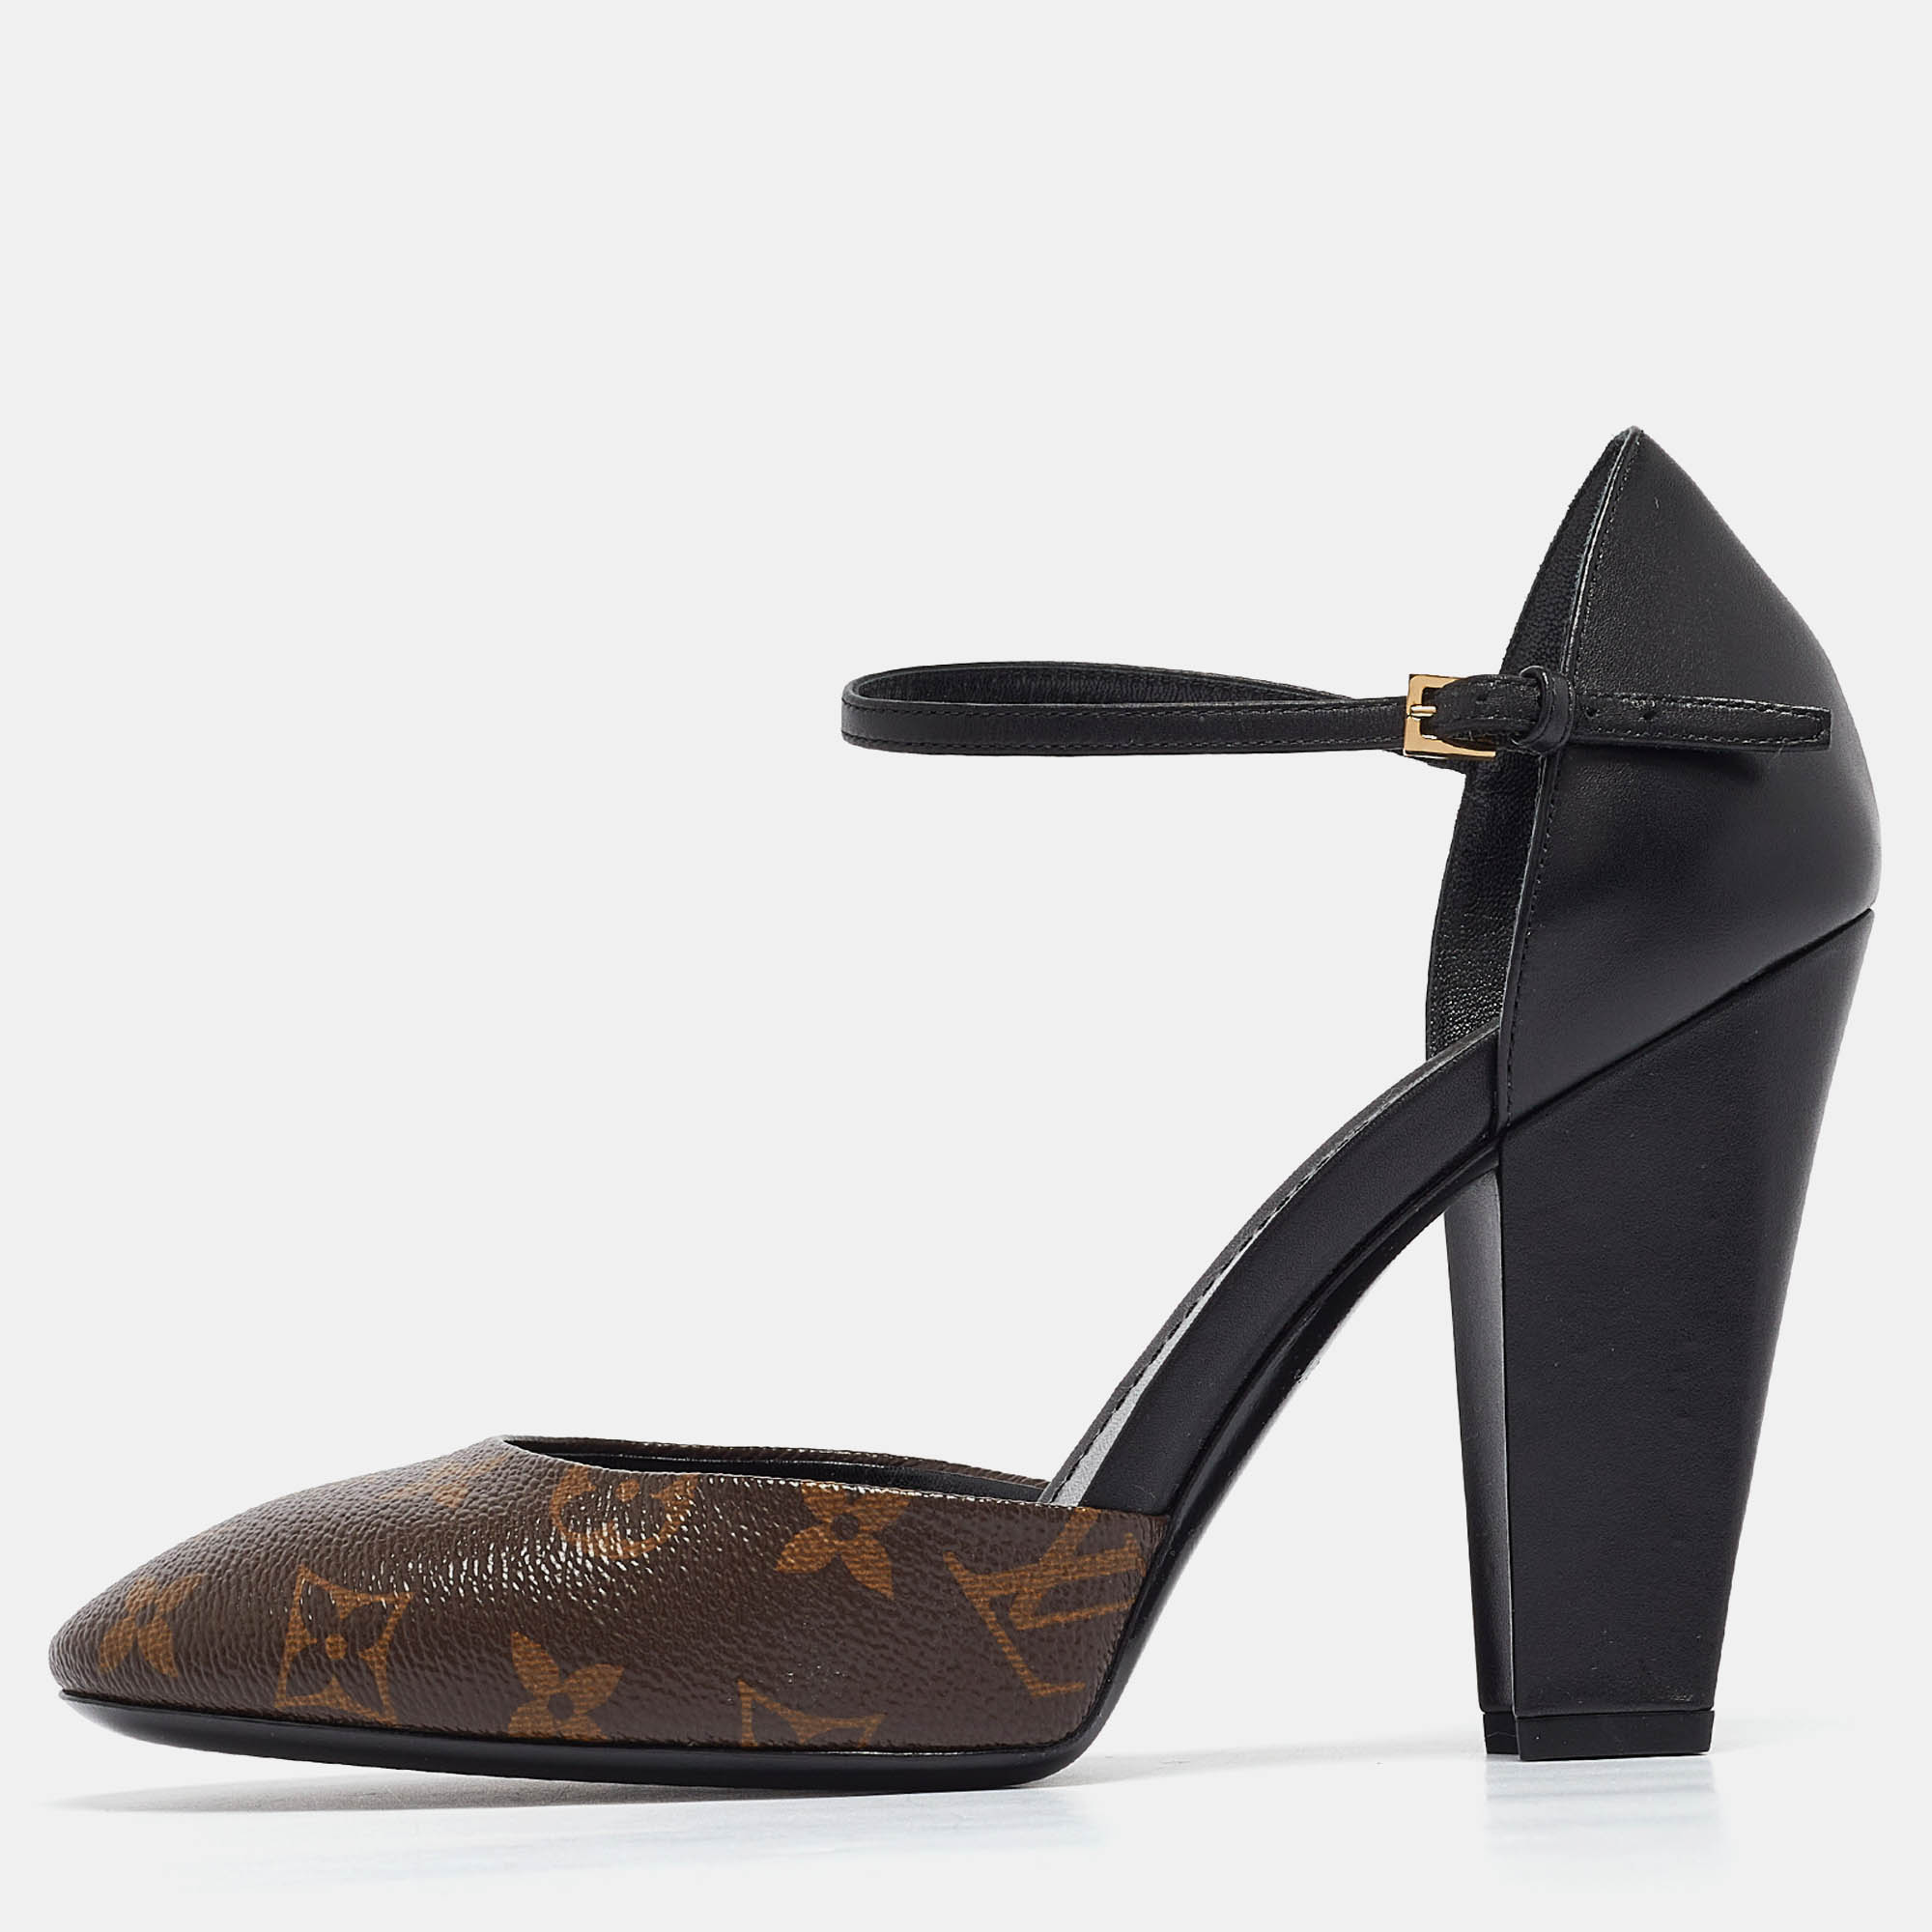 Louis vuitton brown/black monogram canvas and leather d'orsay ankle strap pumps size 39.5